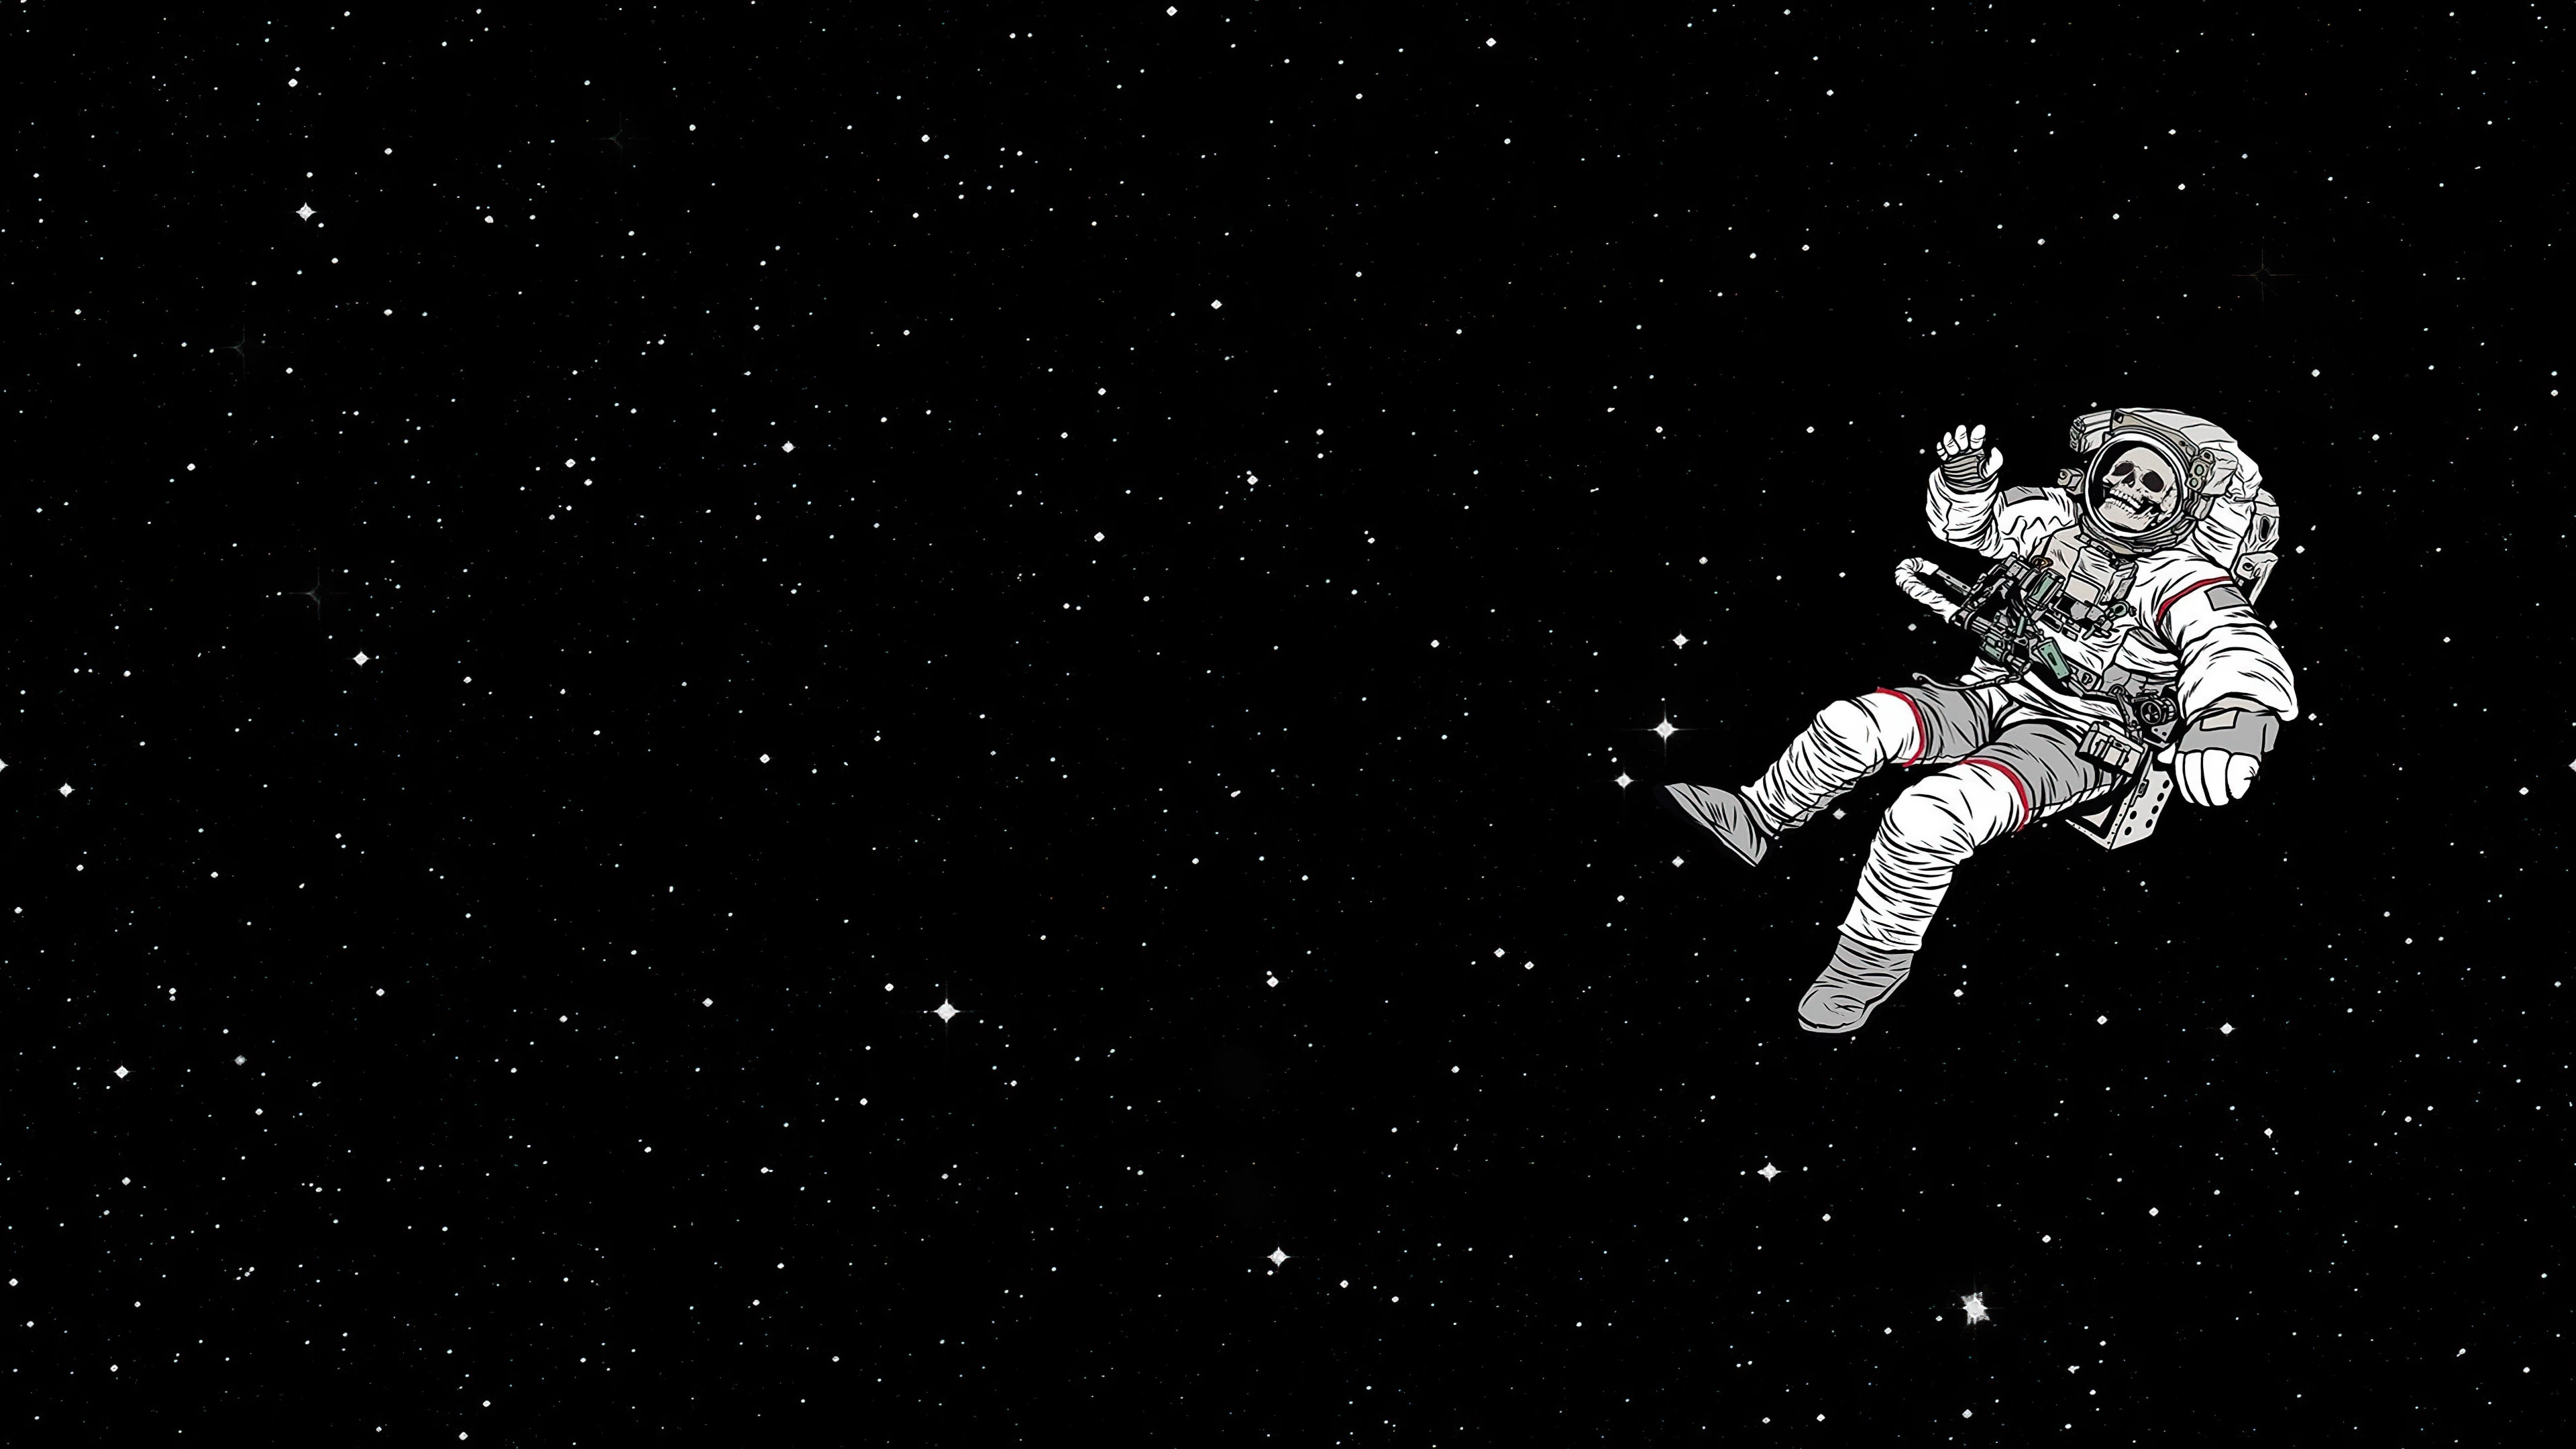 Astronaut Aesthetic Wallpaper 4K for Desktop Laptop PC free Download